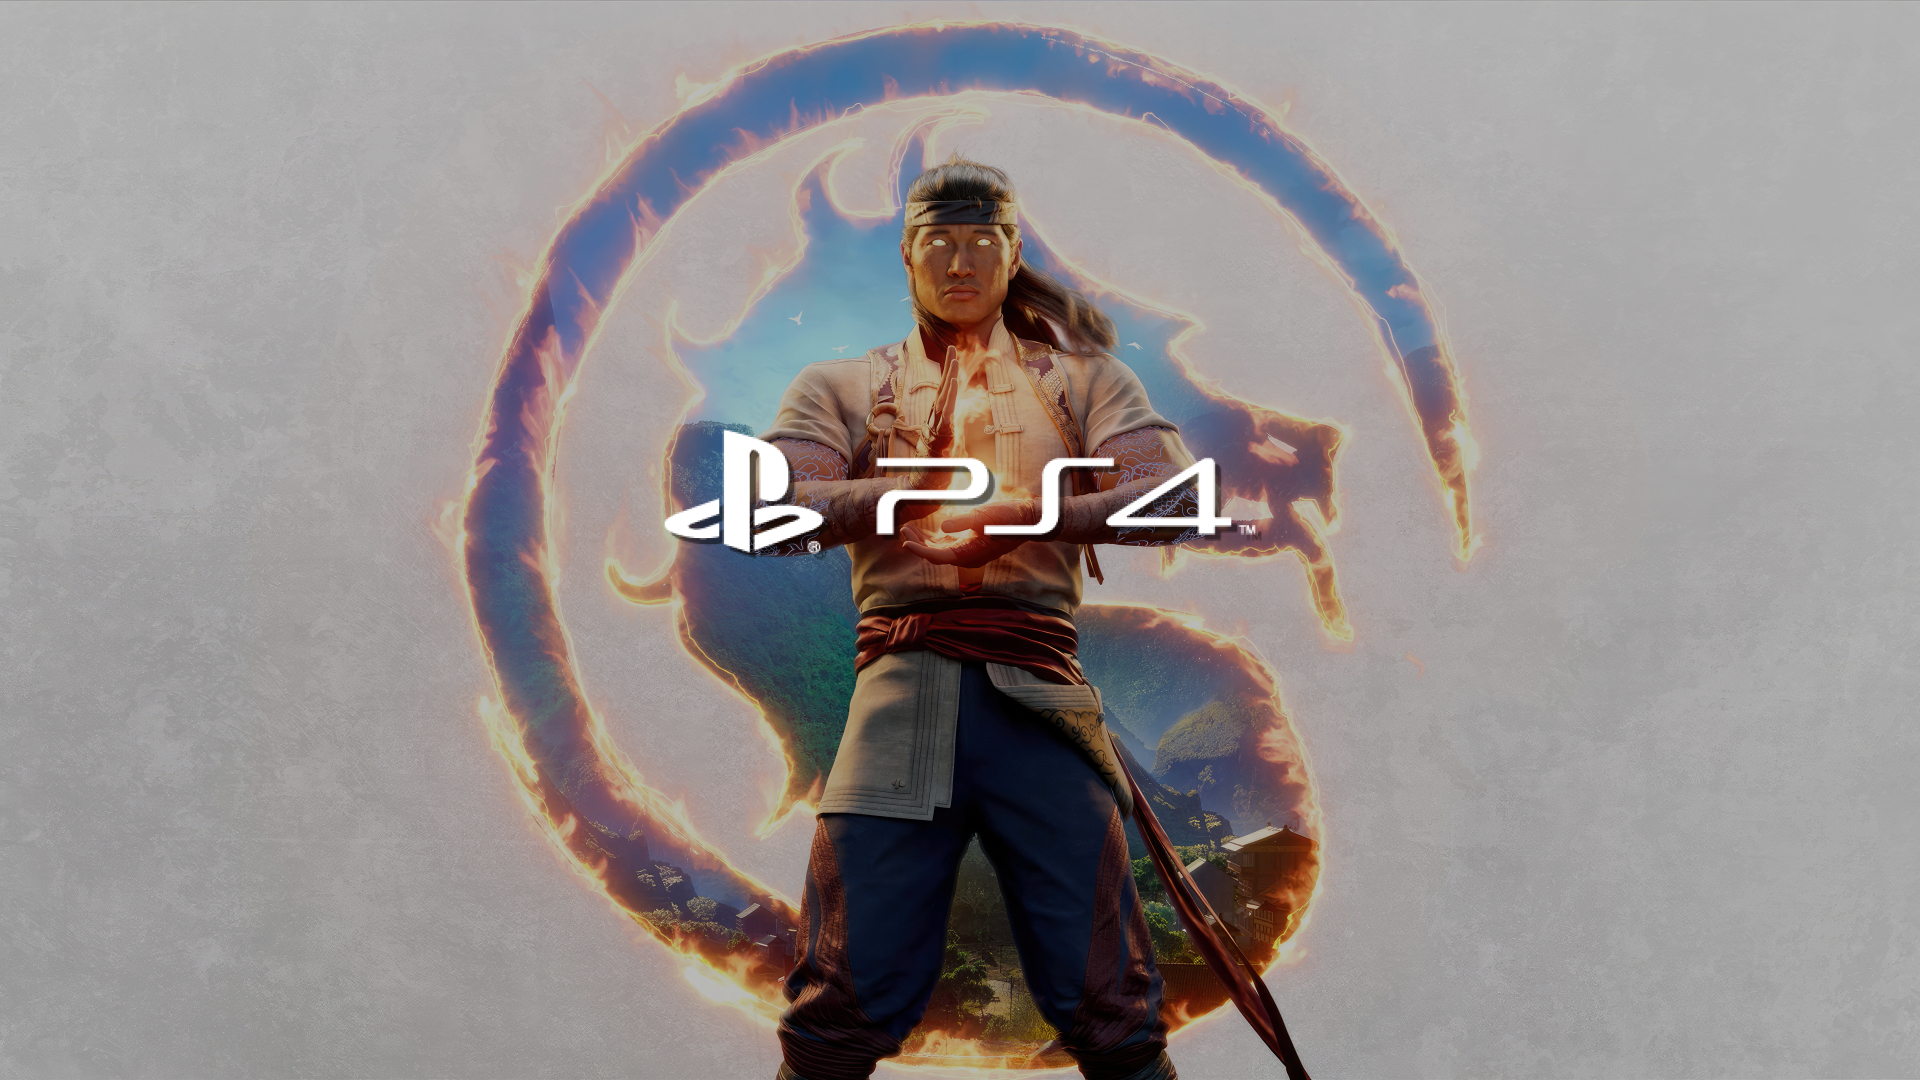 Mortal Kombat 1 - PlayStation 5